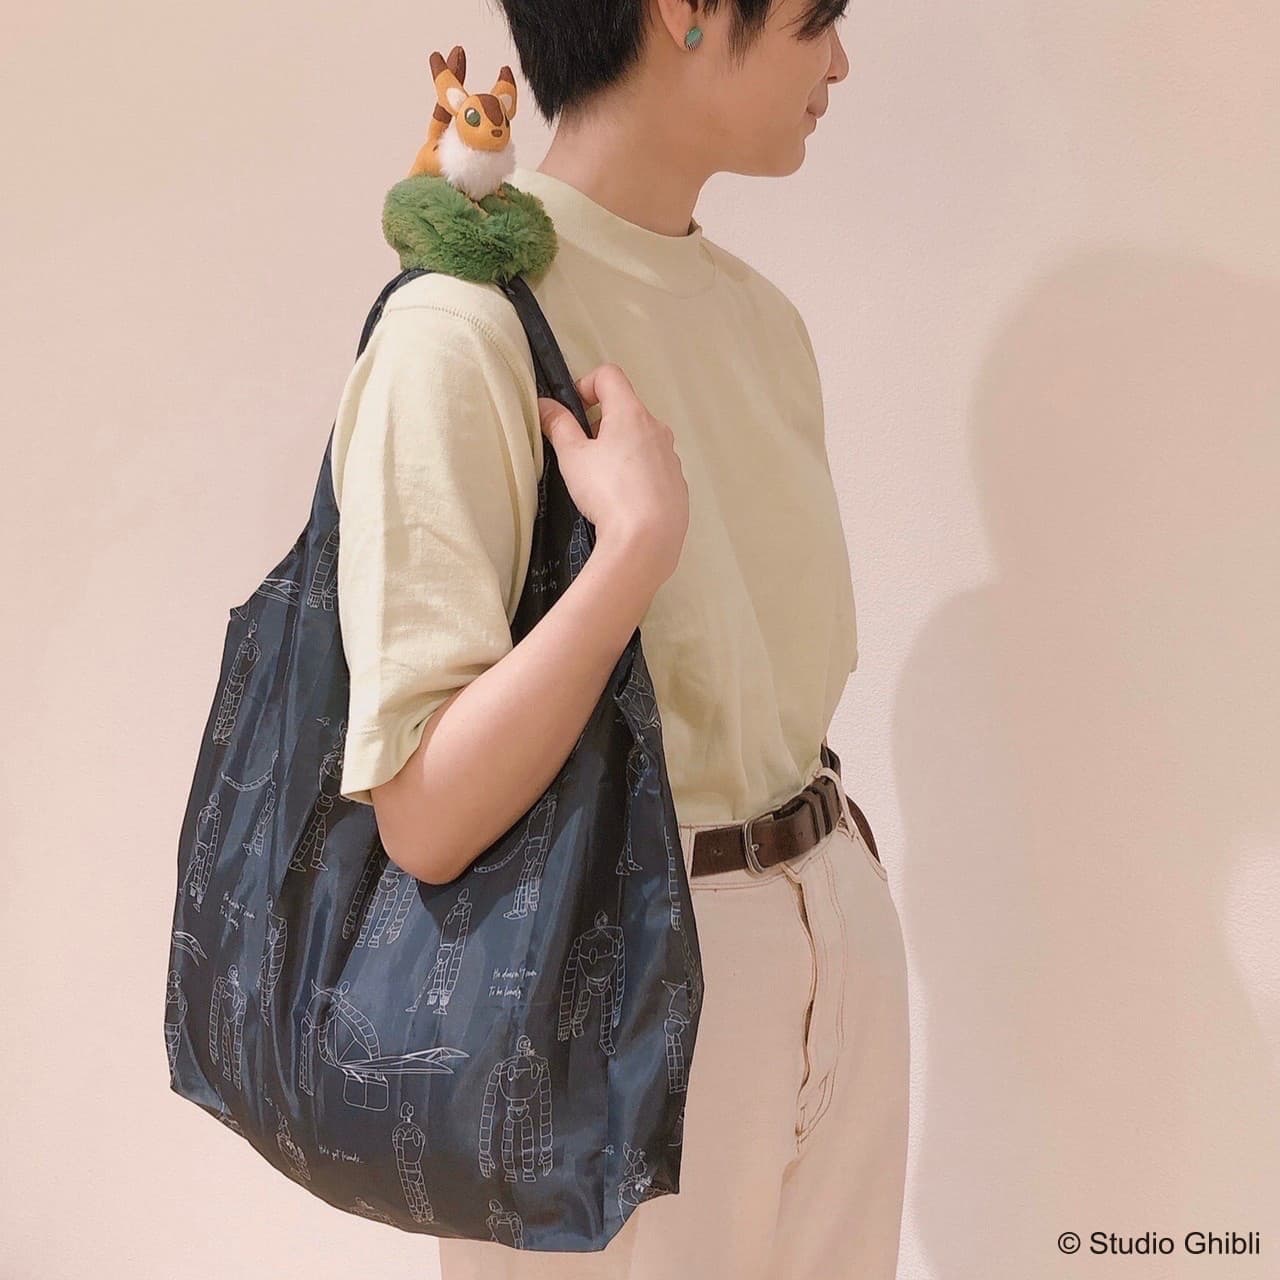 Ghibli "Eco bag on the shoulder"